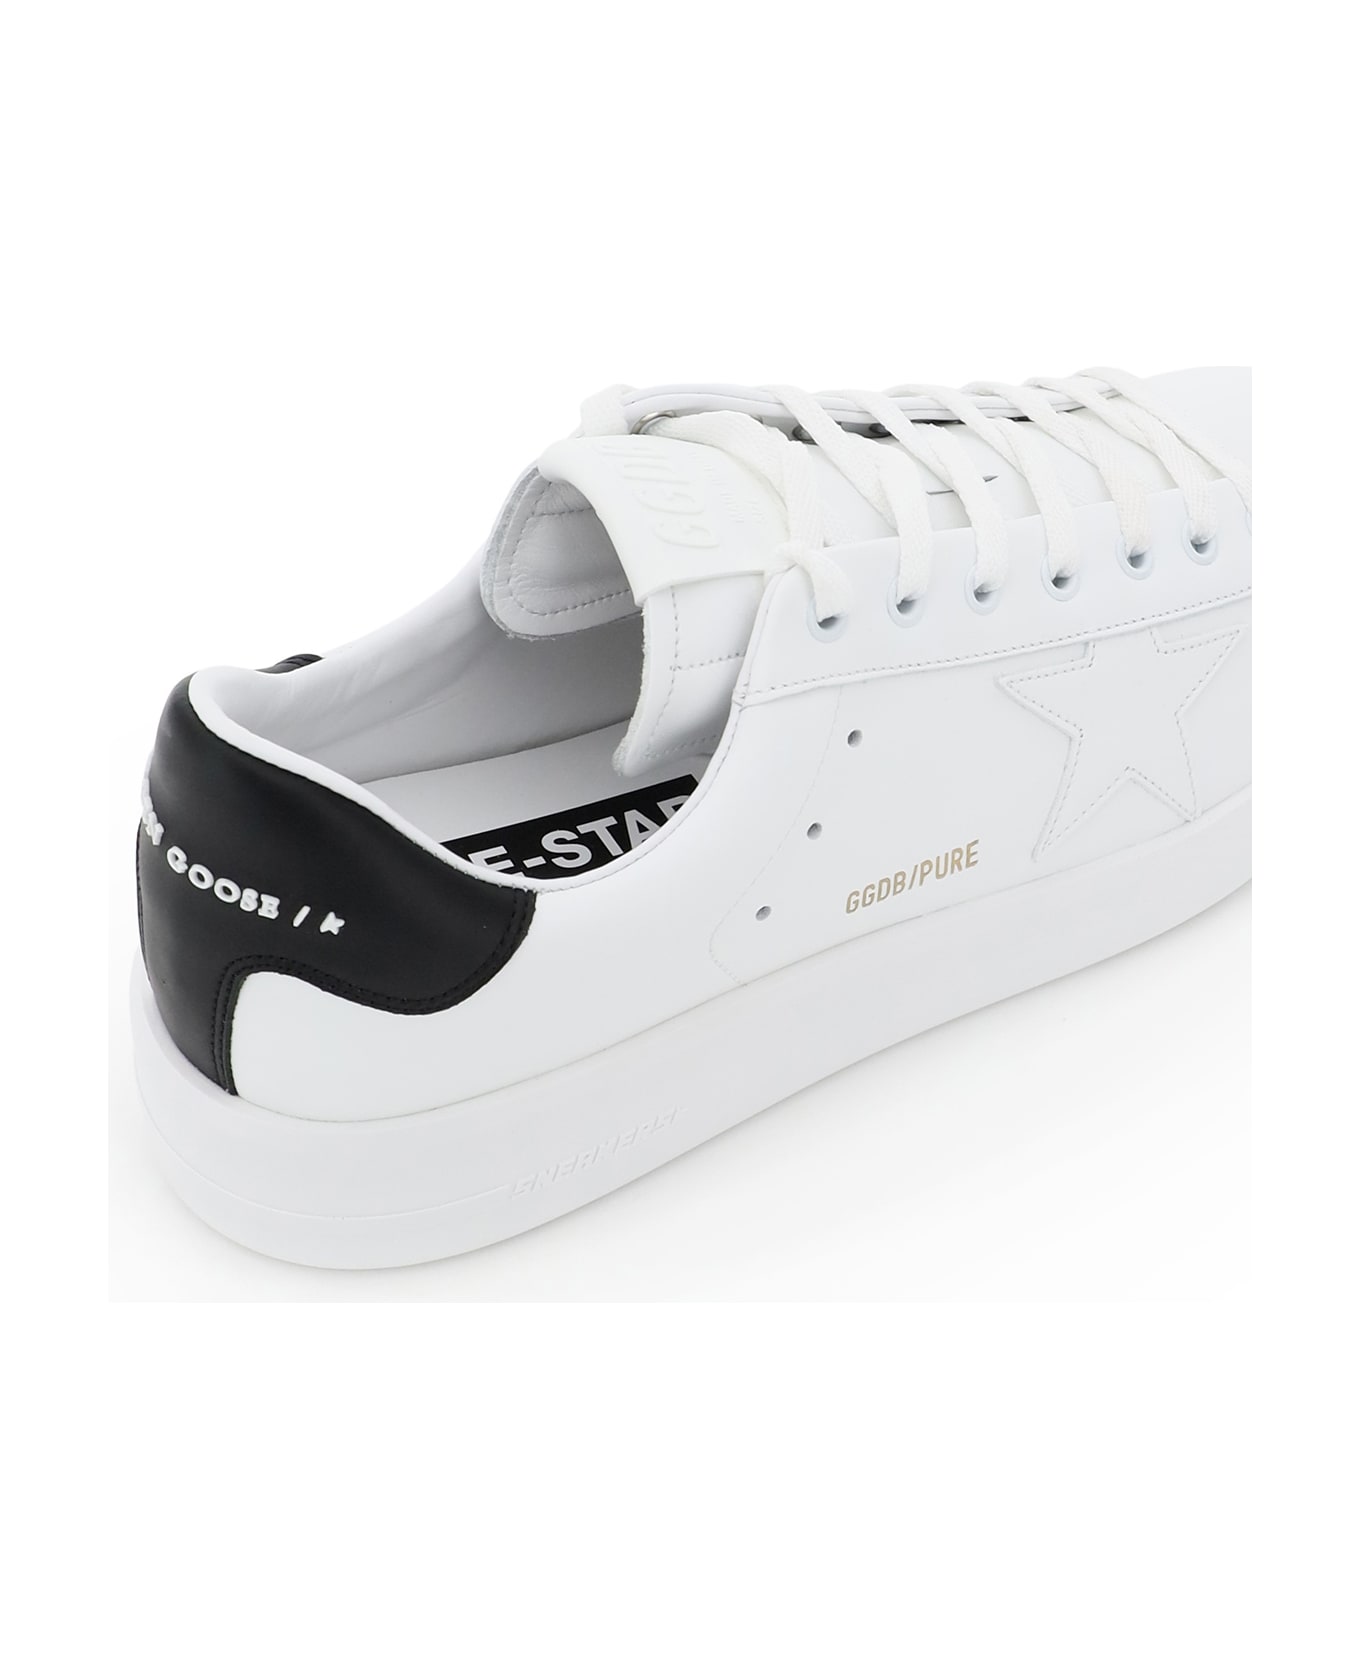 Golden Goose Pure-star Sneakers - WHITE BLACK (White)